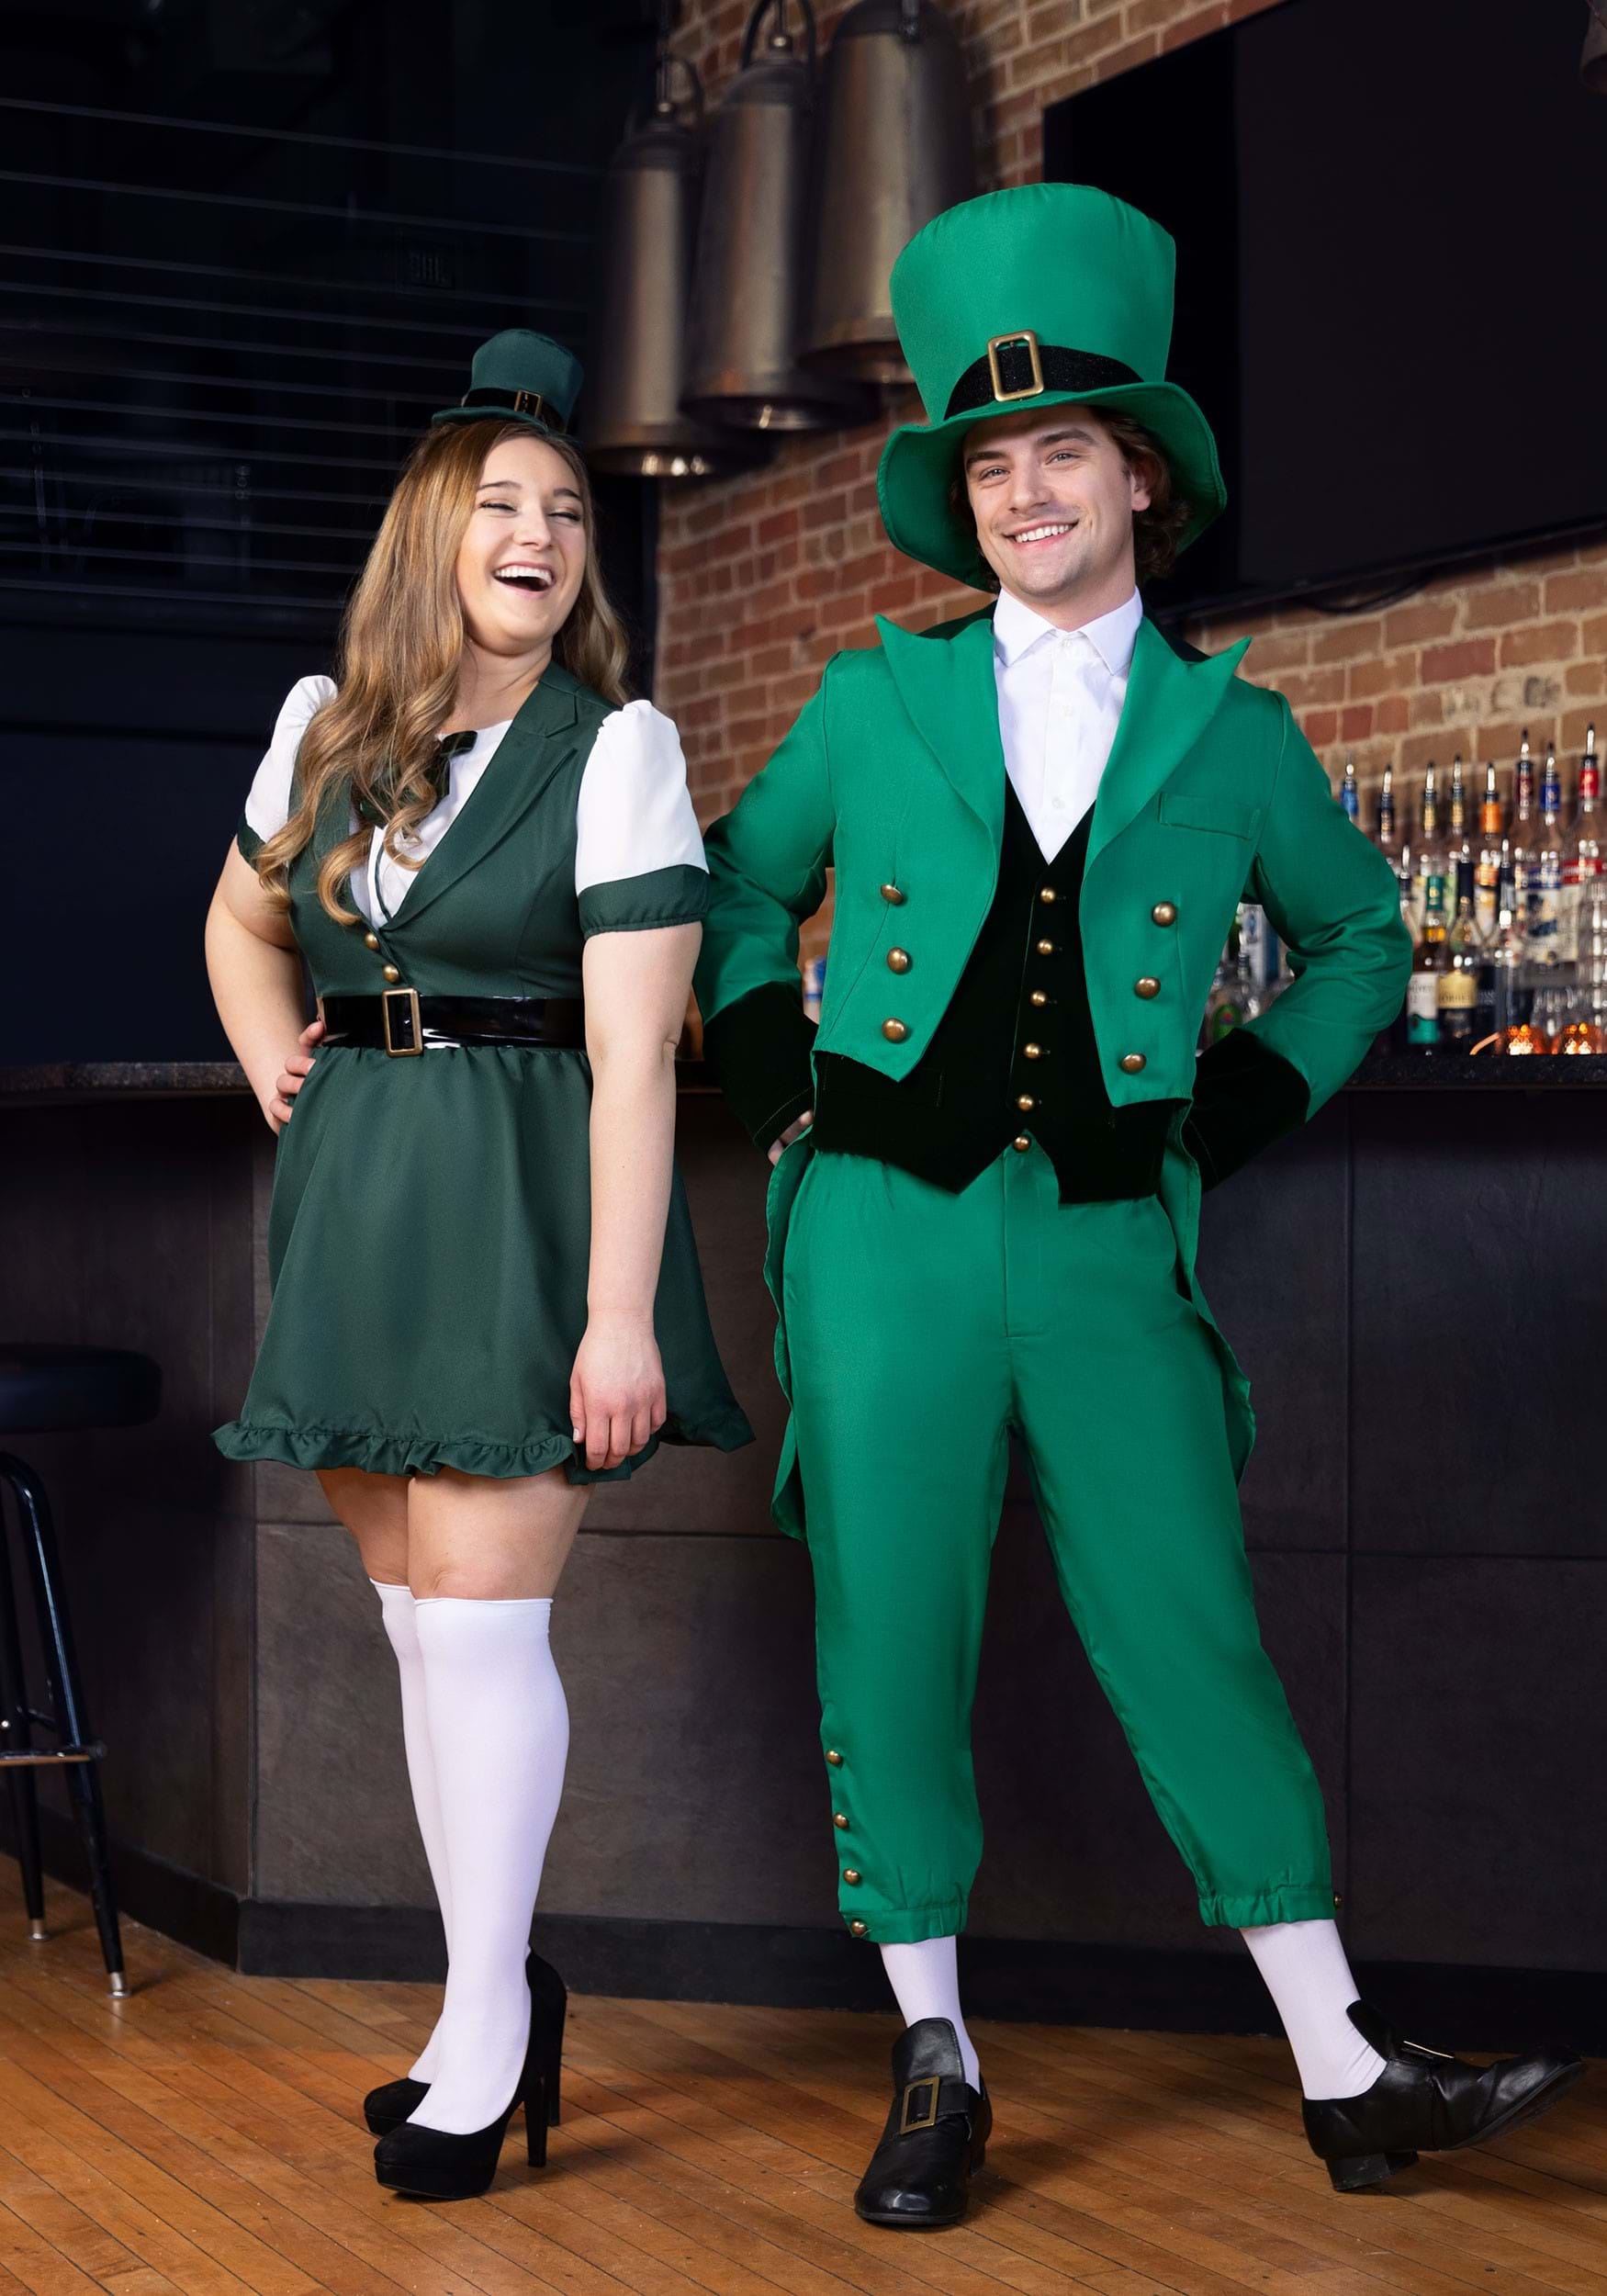 Sexy St. Patrick's Day Leprechaun Costume